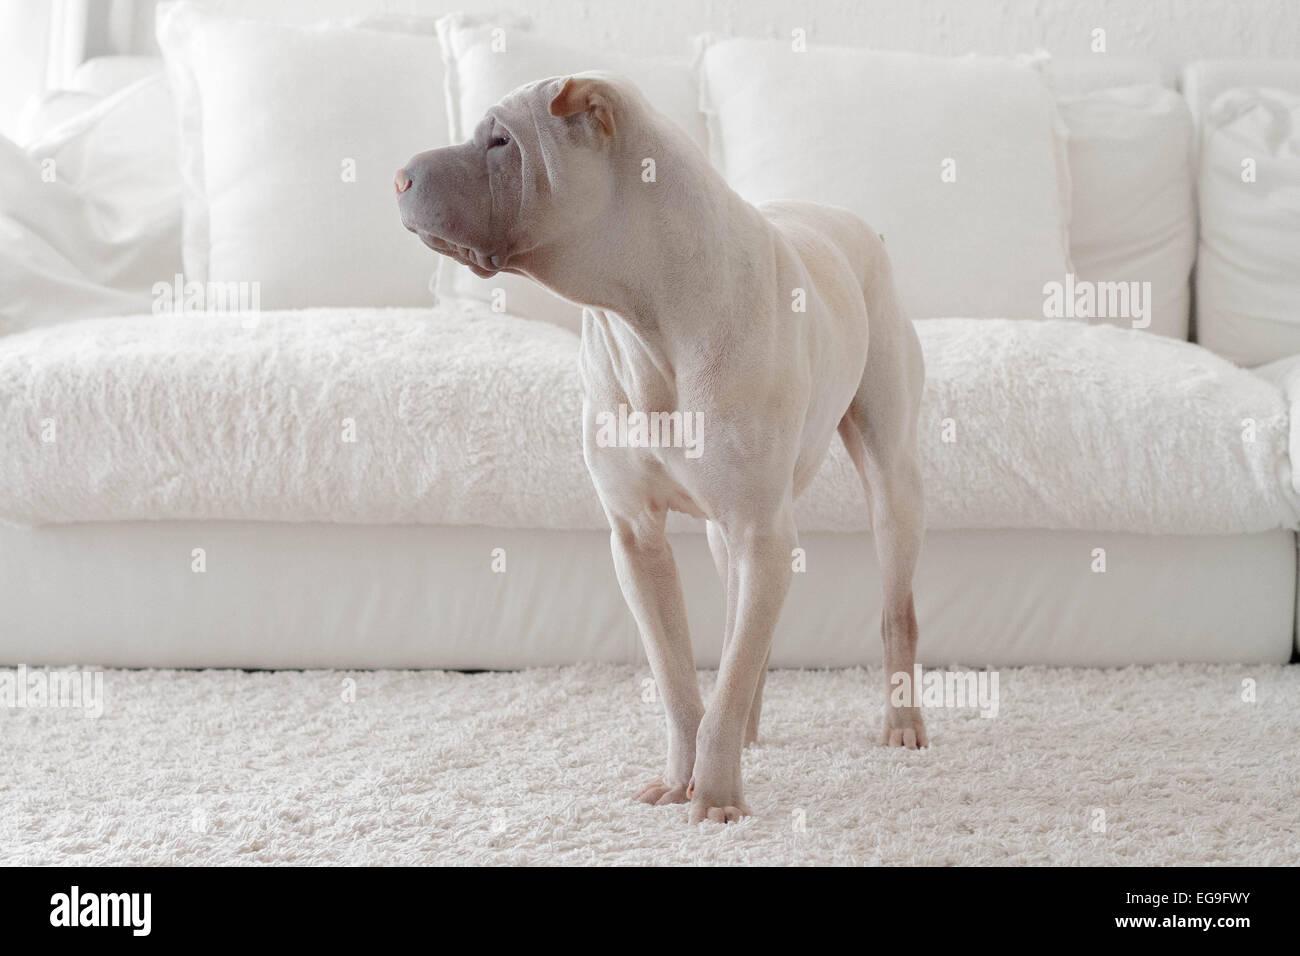 Shar pei dog standing beside white sofa Stock Photo